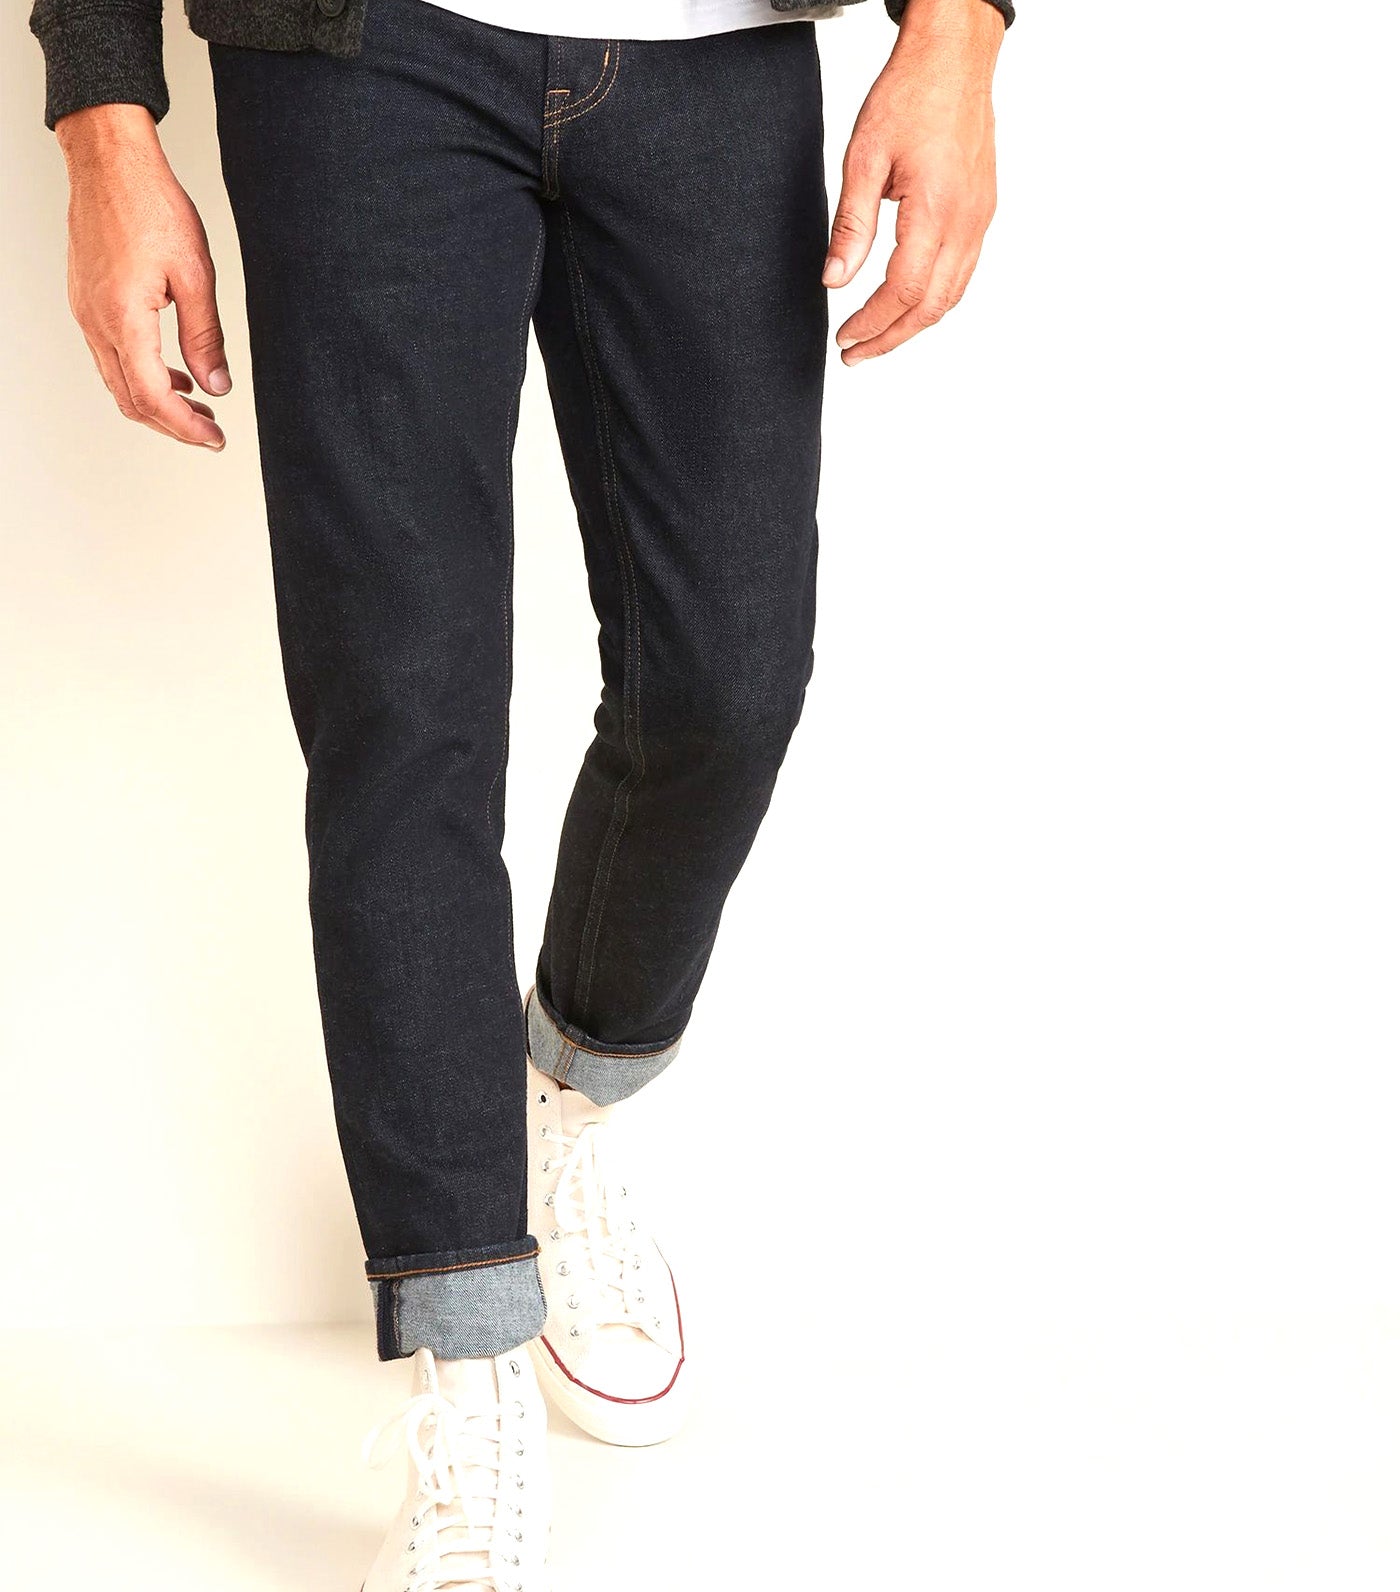 Relaxed Slim Taper Built-In Flex Dark-Wash Jeans Rinse